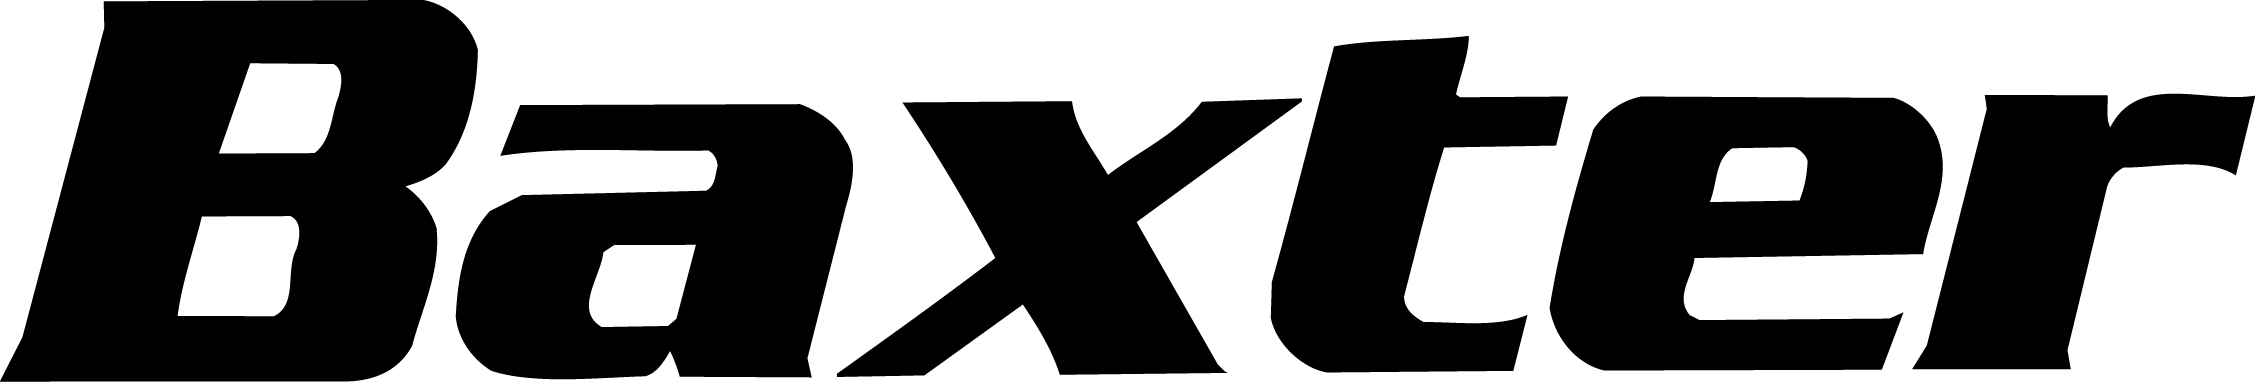 Logo_Baxter_Black.jpg